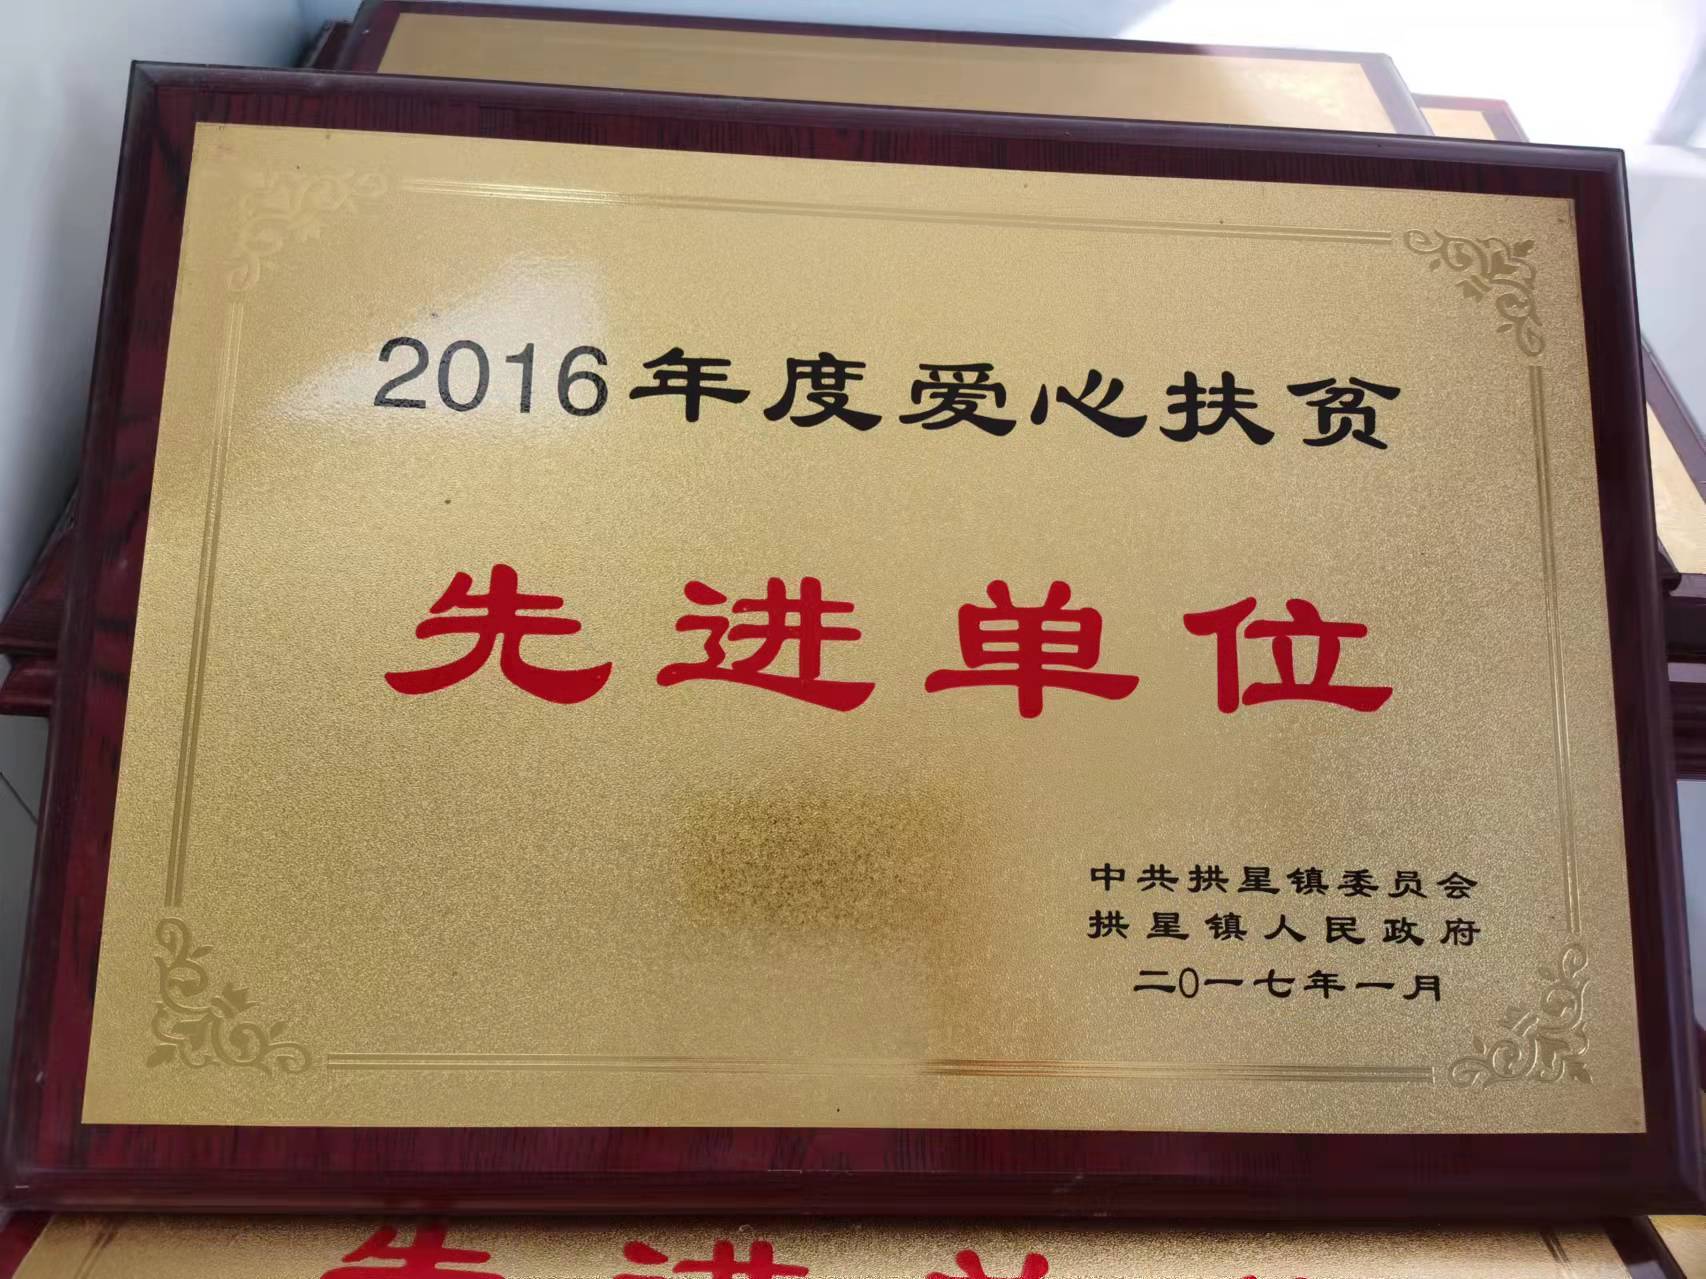 2016 Zhiyuan Poverty Alleviation Advanced Unit